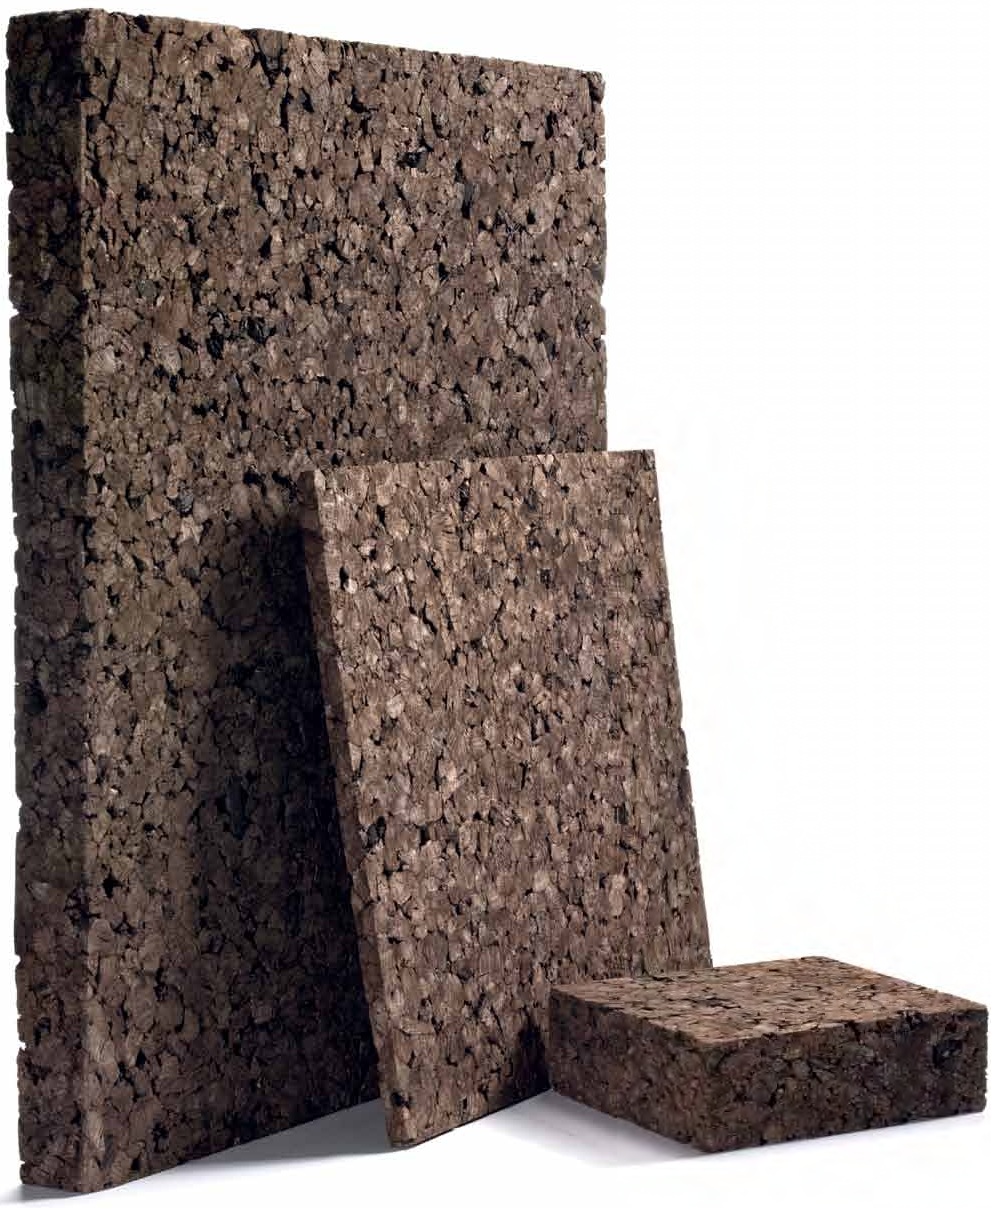 100% Eco Friendly Cork Bark Tiles of Various Lengths, Terrarium